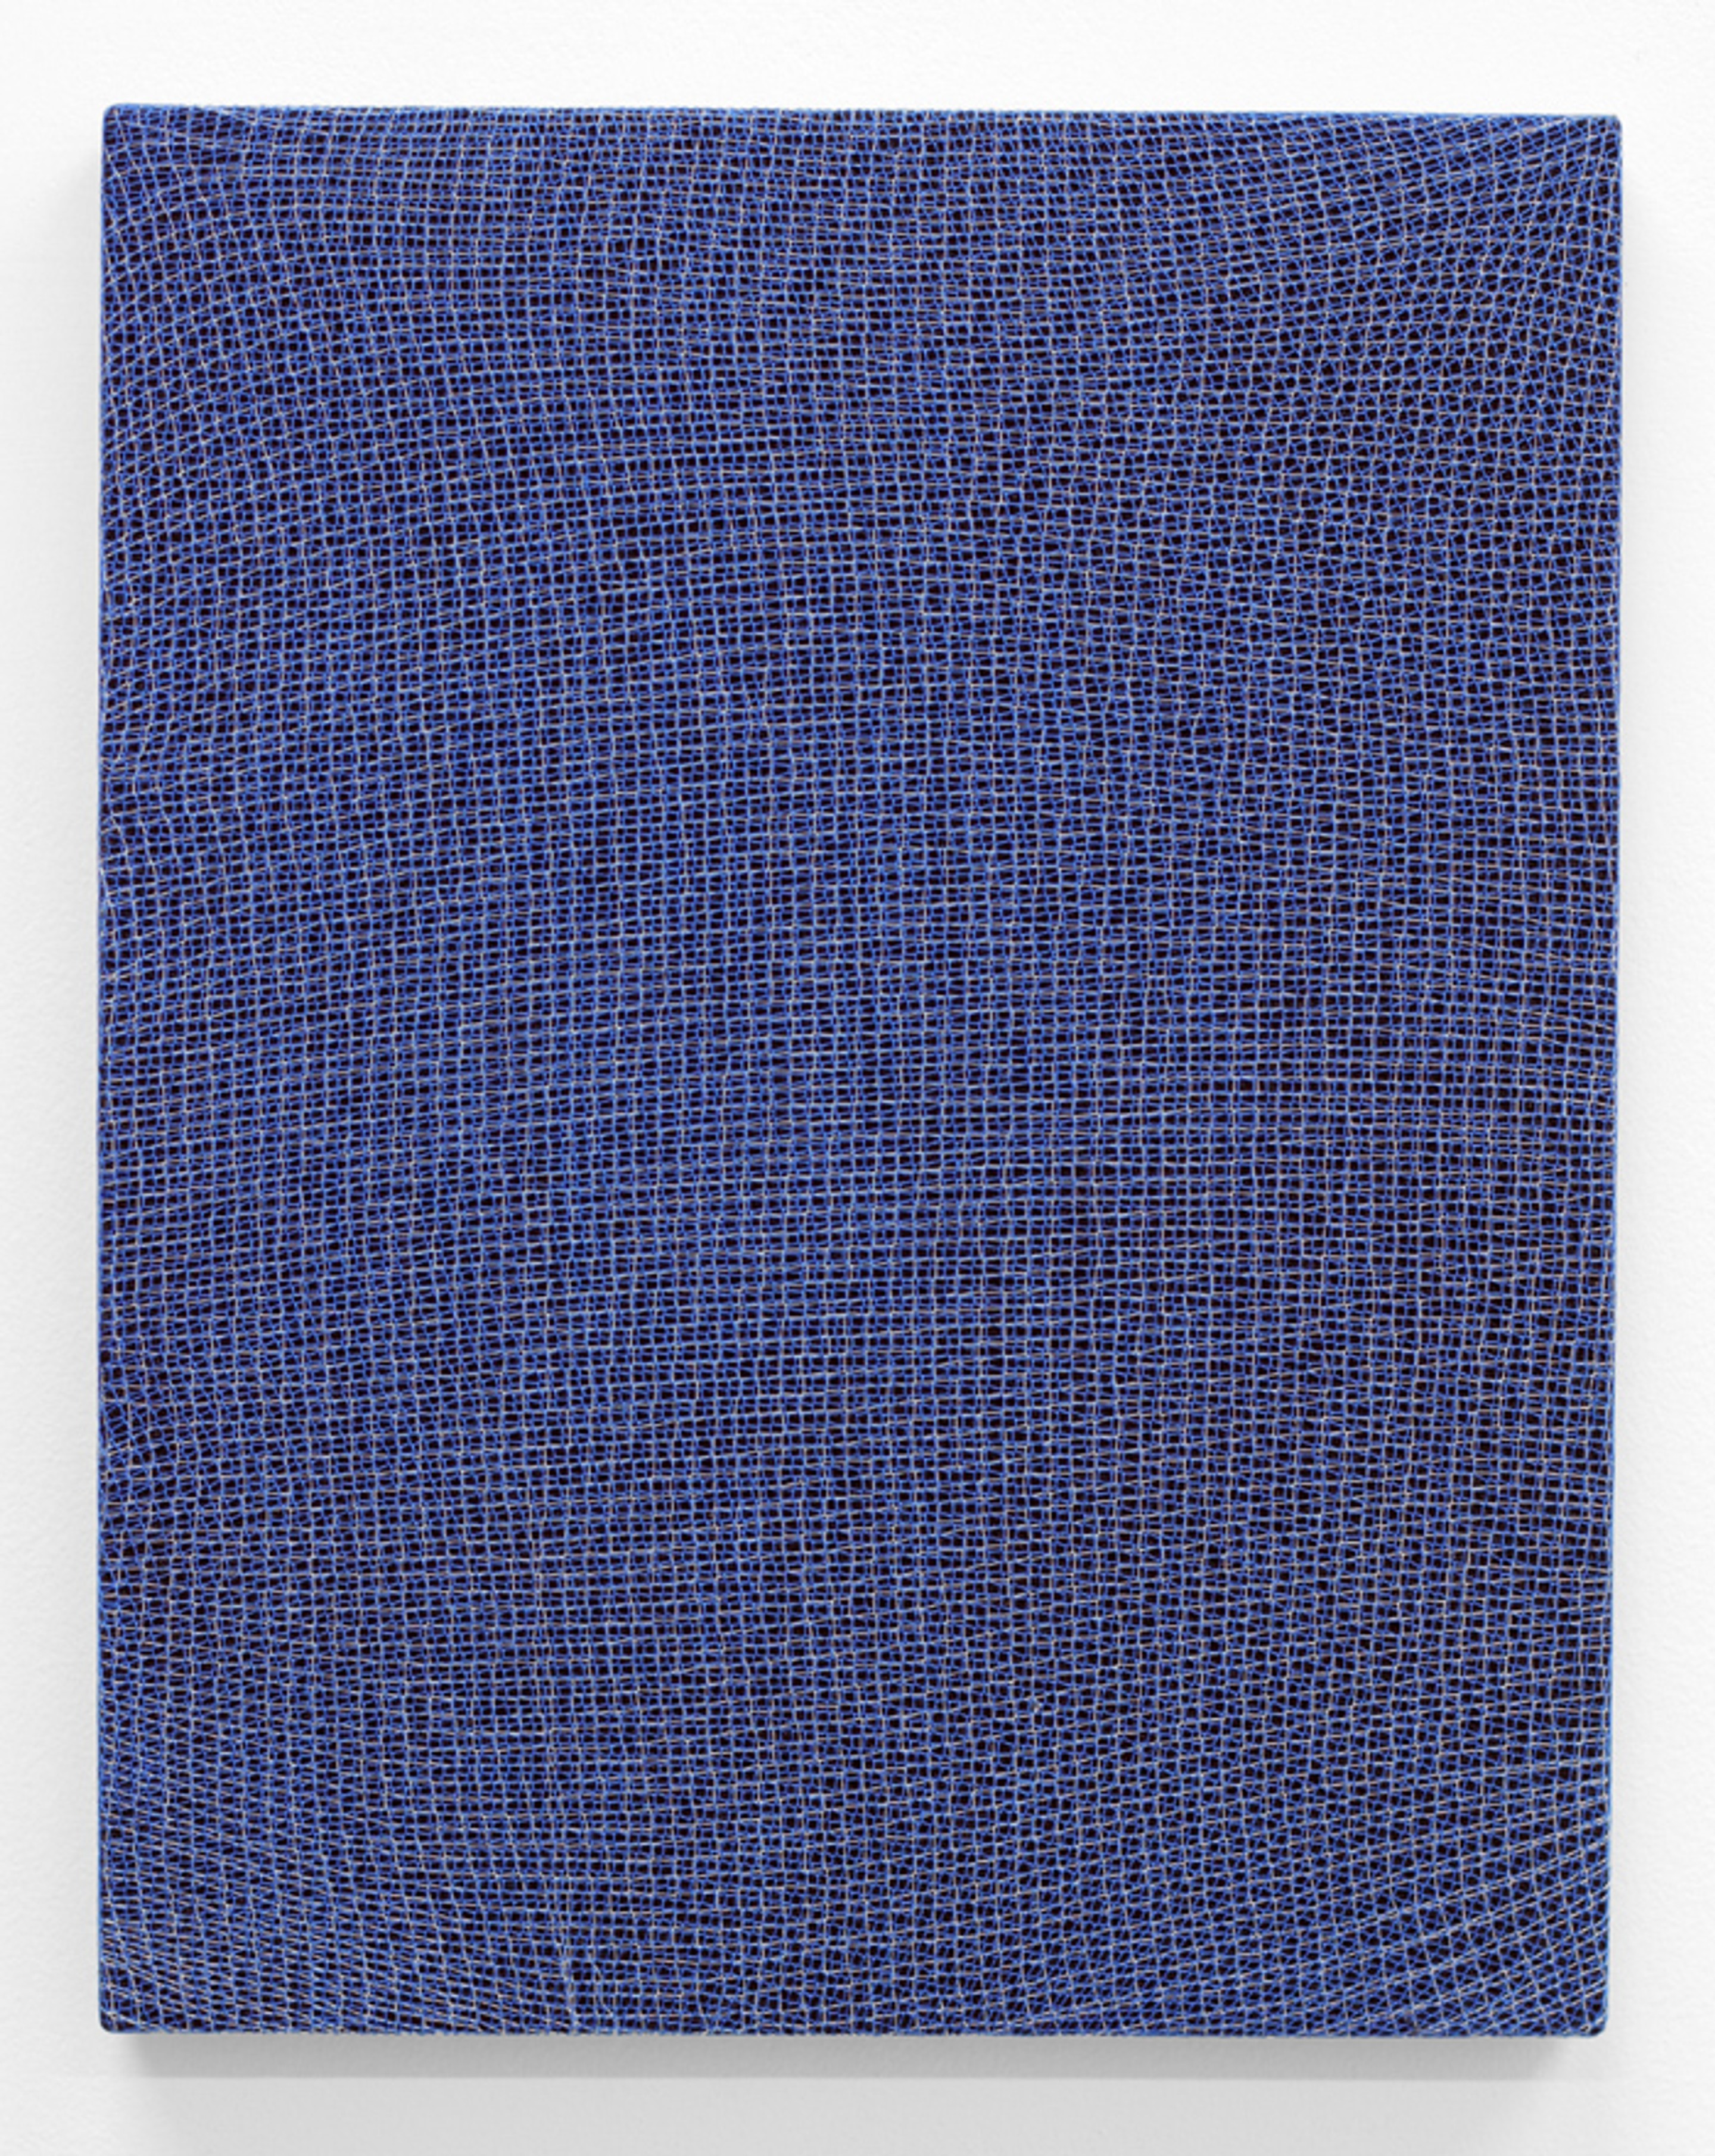 Luis Miguel Bendaña, Untitled (2015). Custom machine-knit cotton, linen on panel